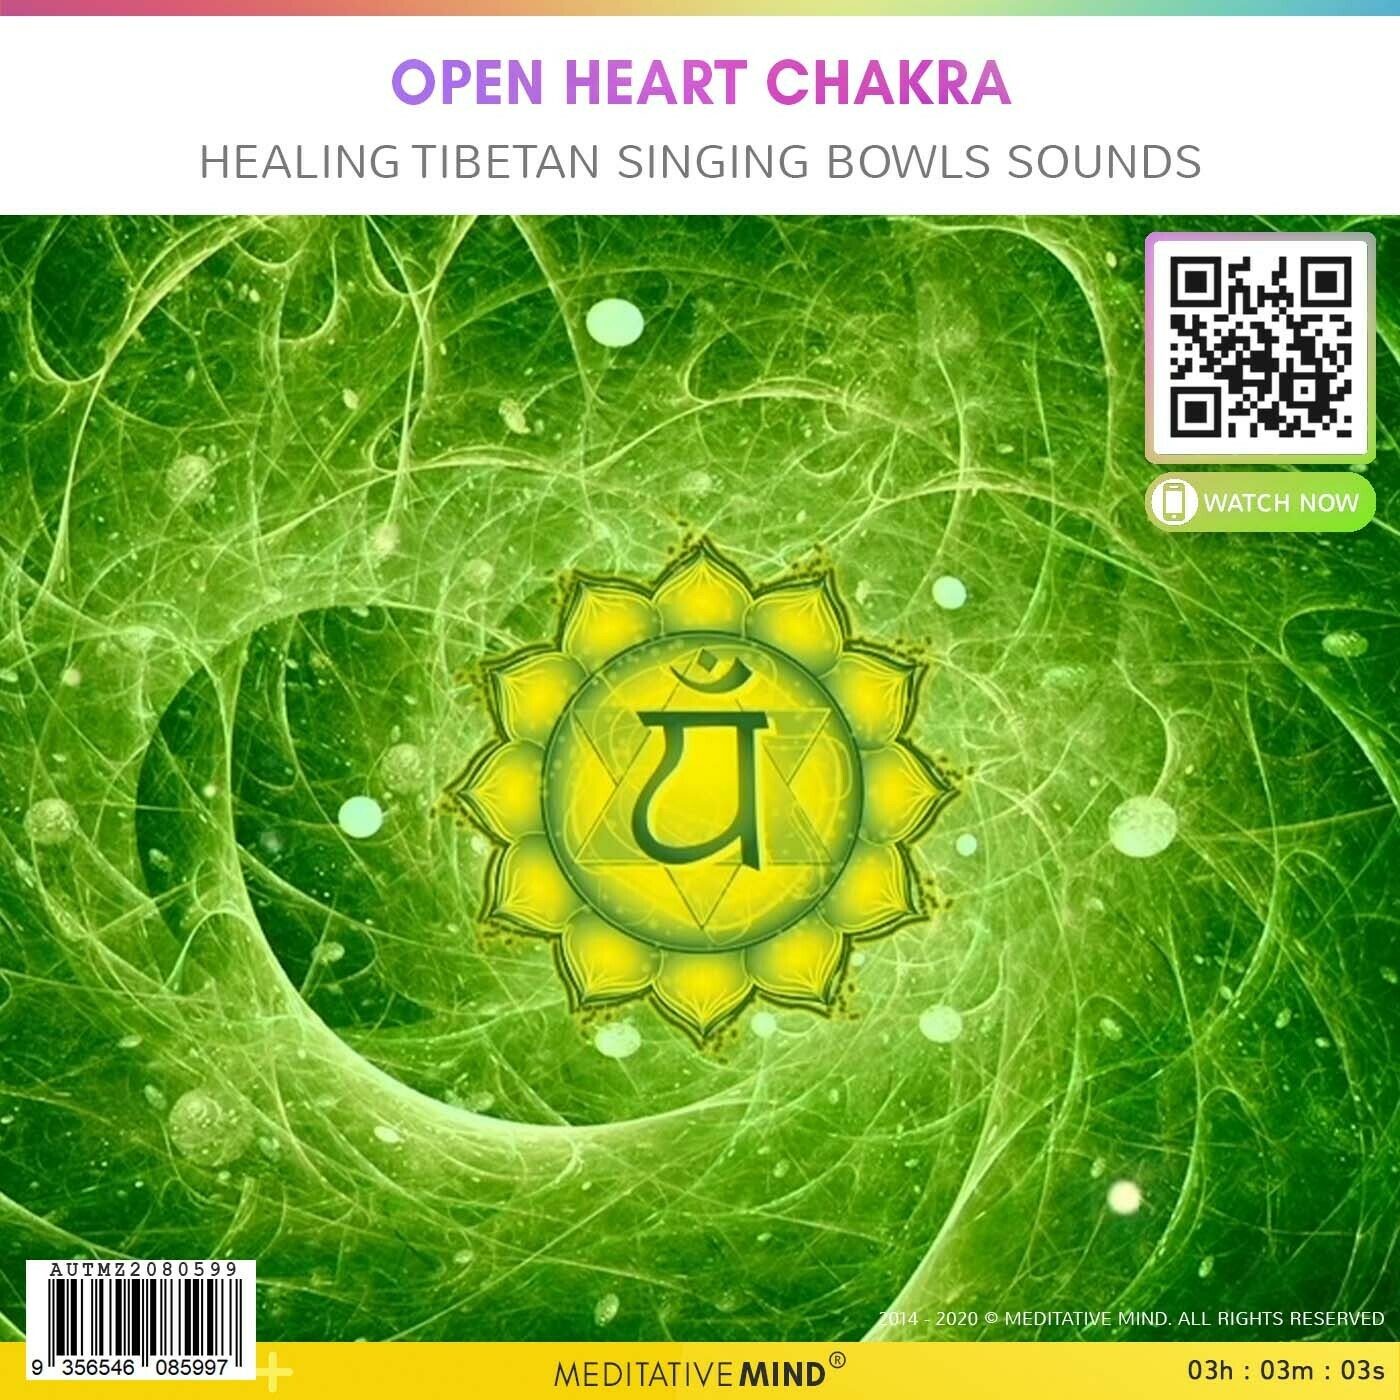 Open Heart Chakra - Healing Tibetan Singing Bowls Sounds